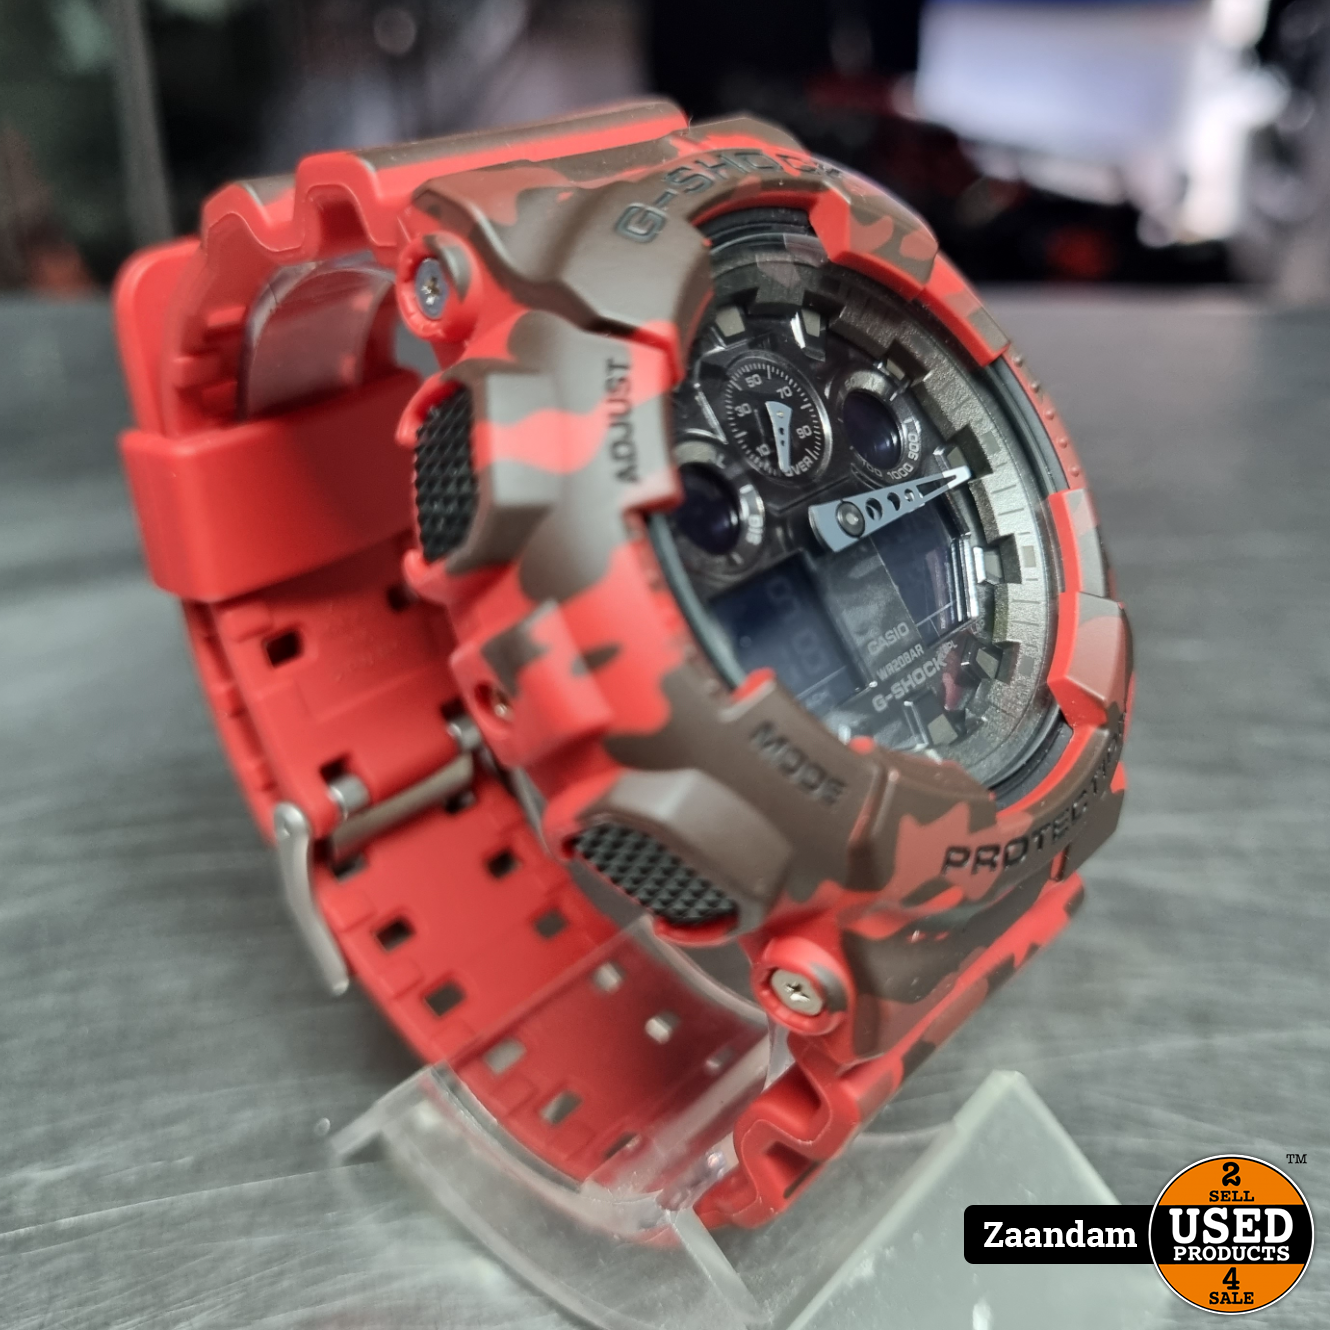 schuld opmerking Vlekkeloos Casio G-Shock GA-100CM Horloge Rood | In nette staat - Used Products Zaandam